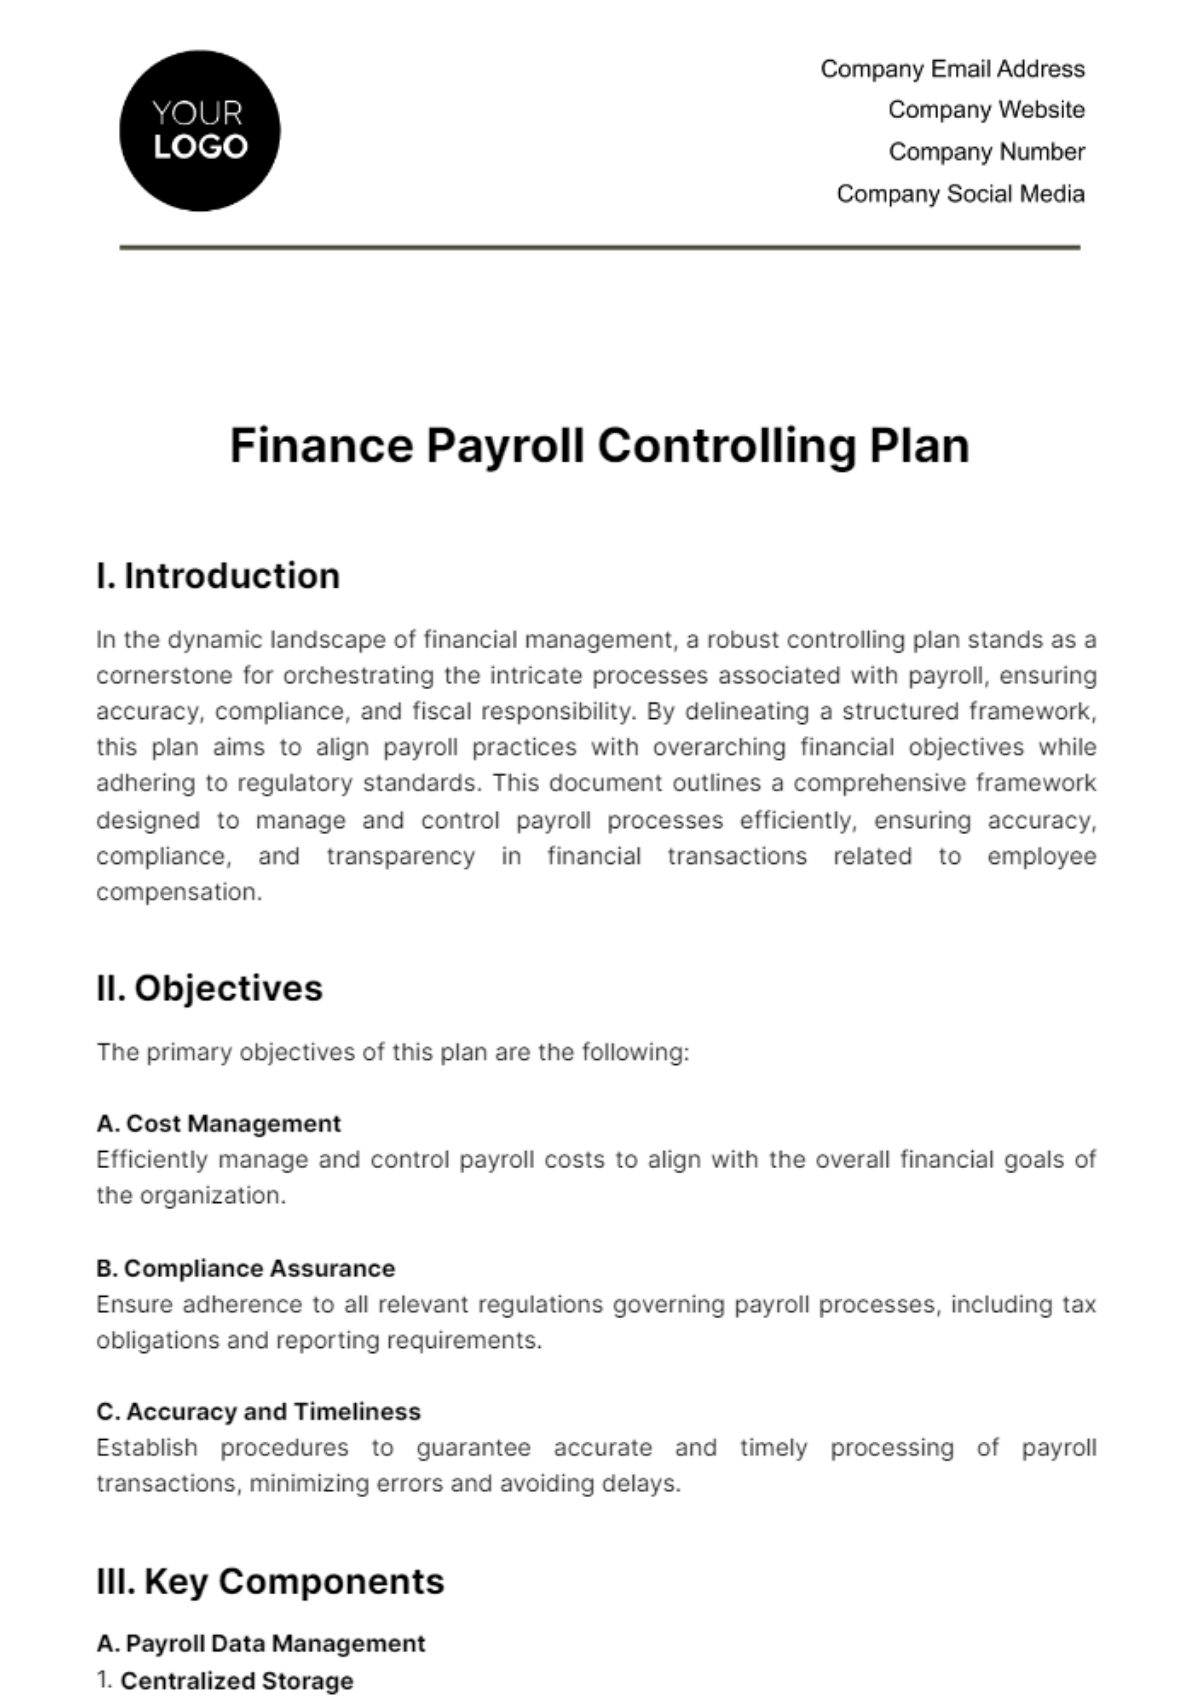 Finance Payroll Controlling Plan Template